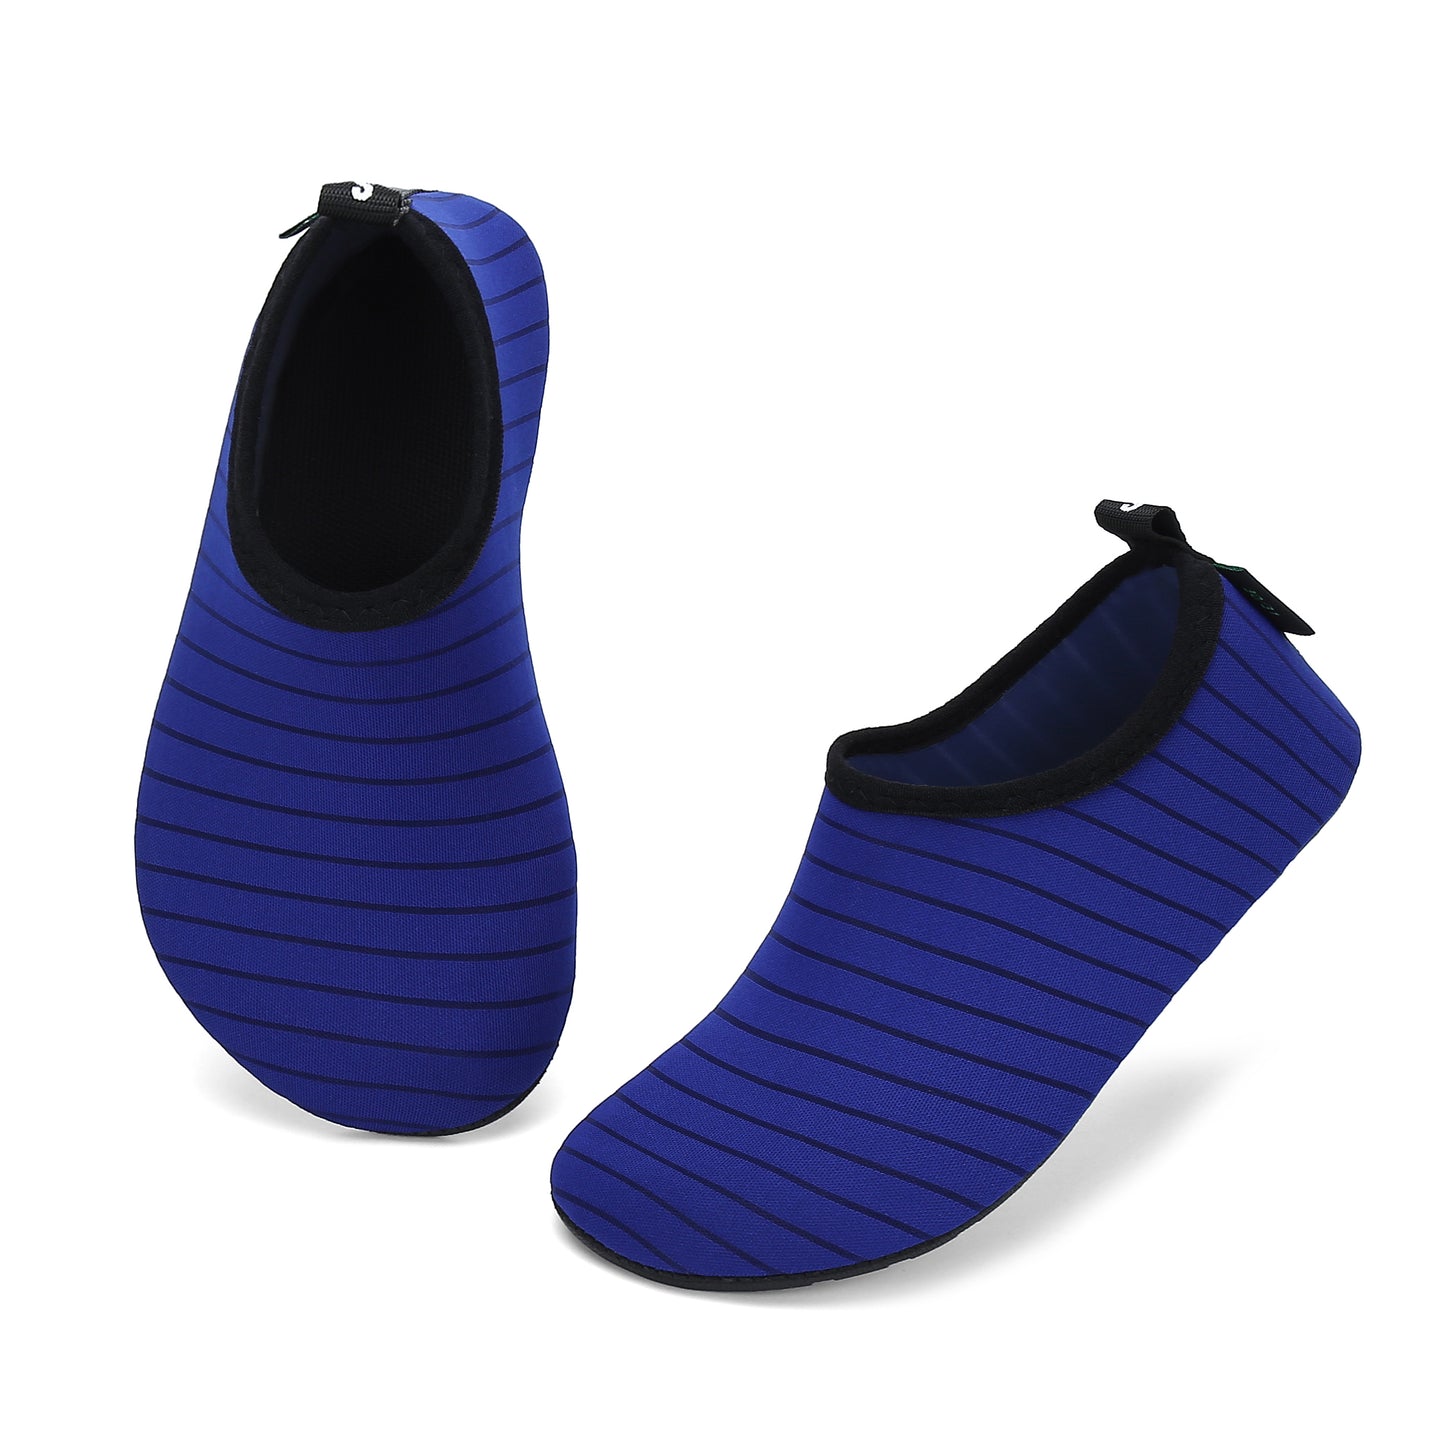 Escarpines Touch IV - Azul - Barefoot Water Socks